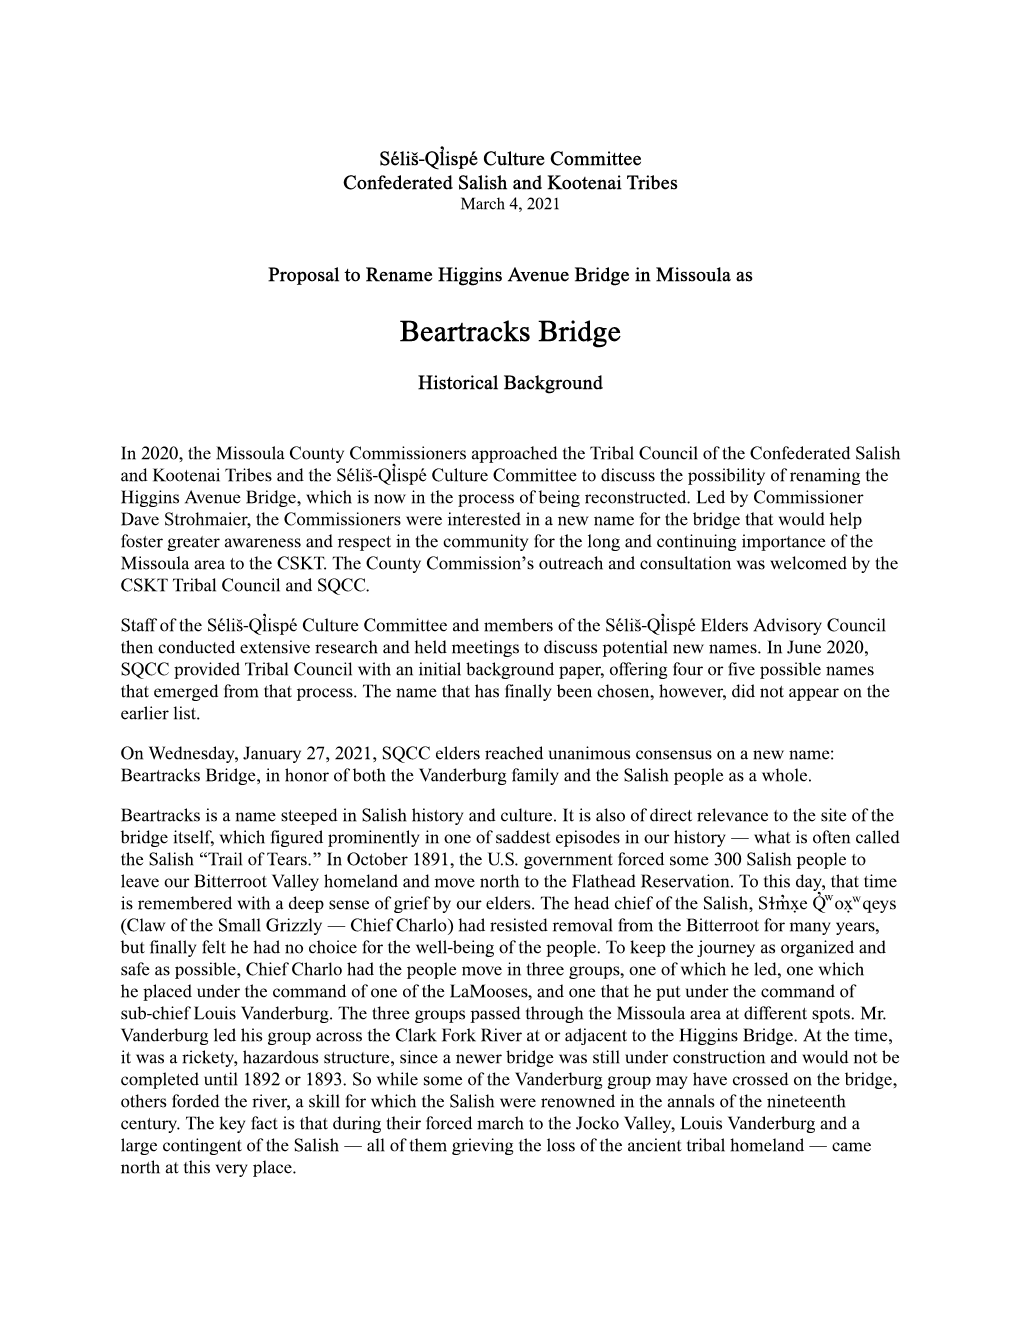 Beartracks Bridge — 4 Mar